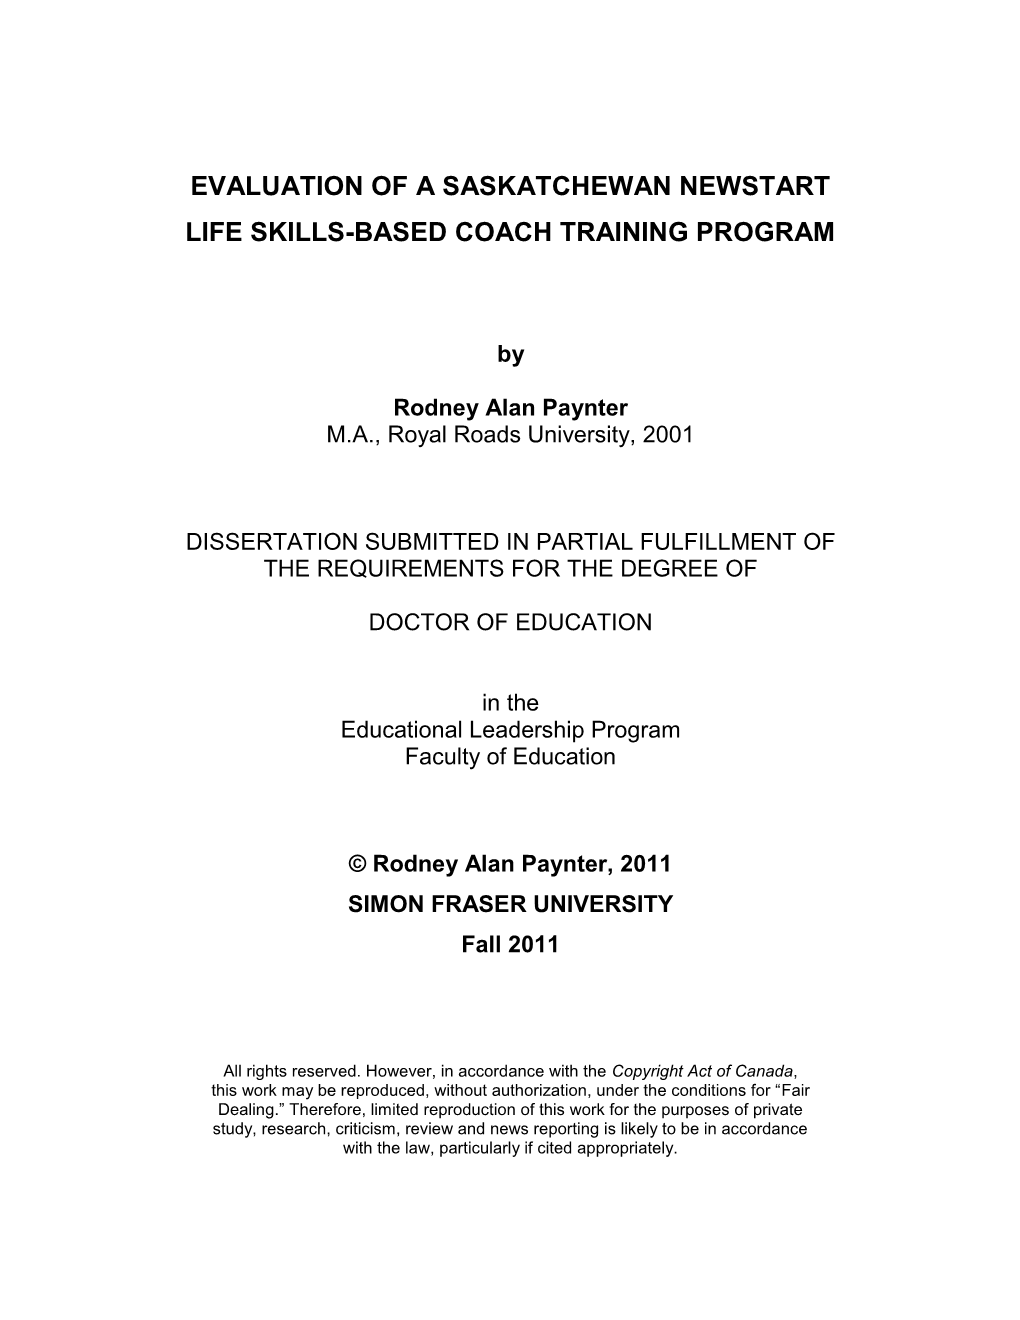 Evaluation of a Saskatchewan Newstart Life Skills-Based Coach Training Program